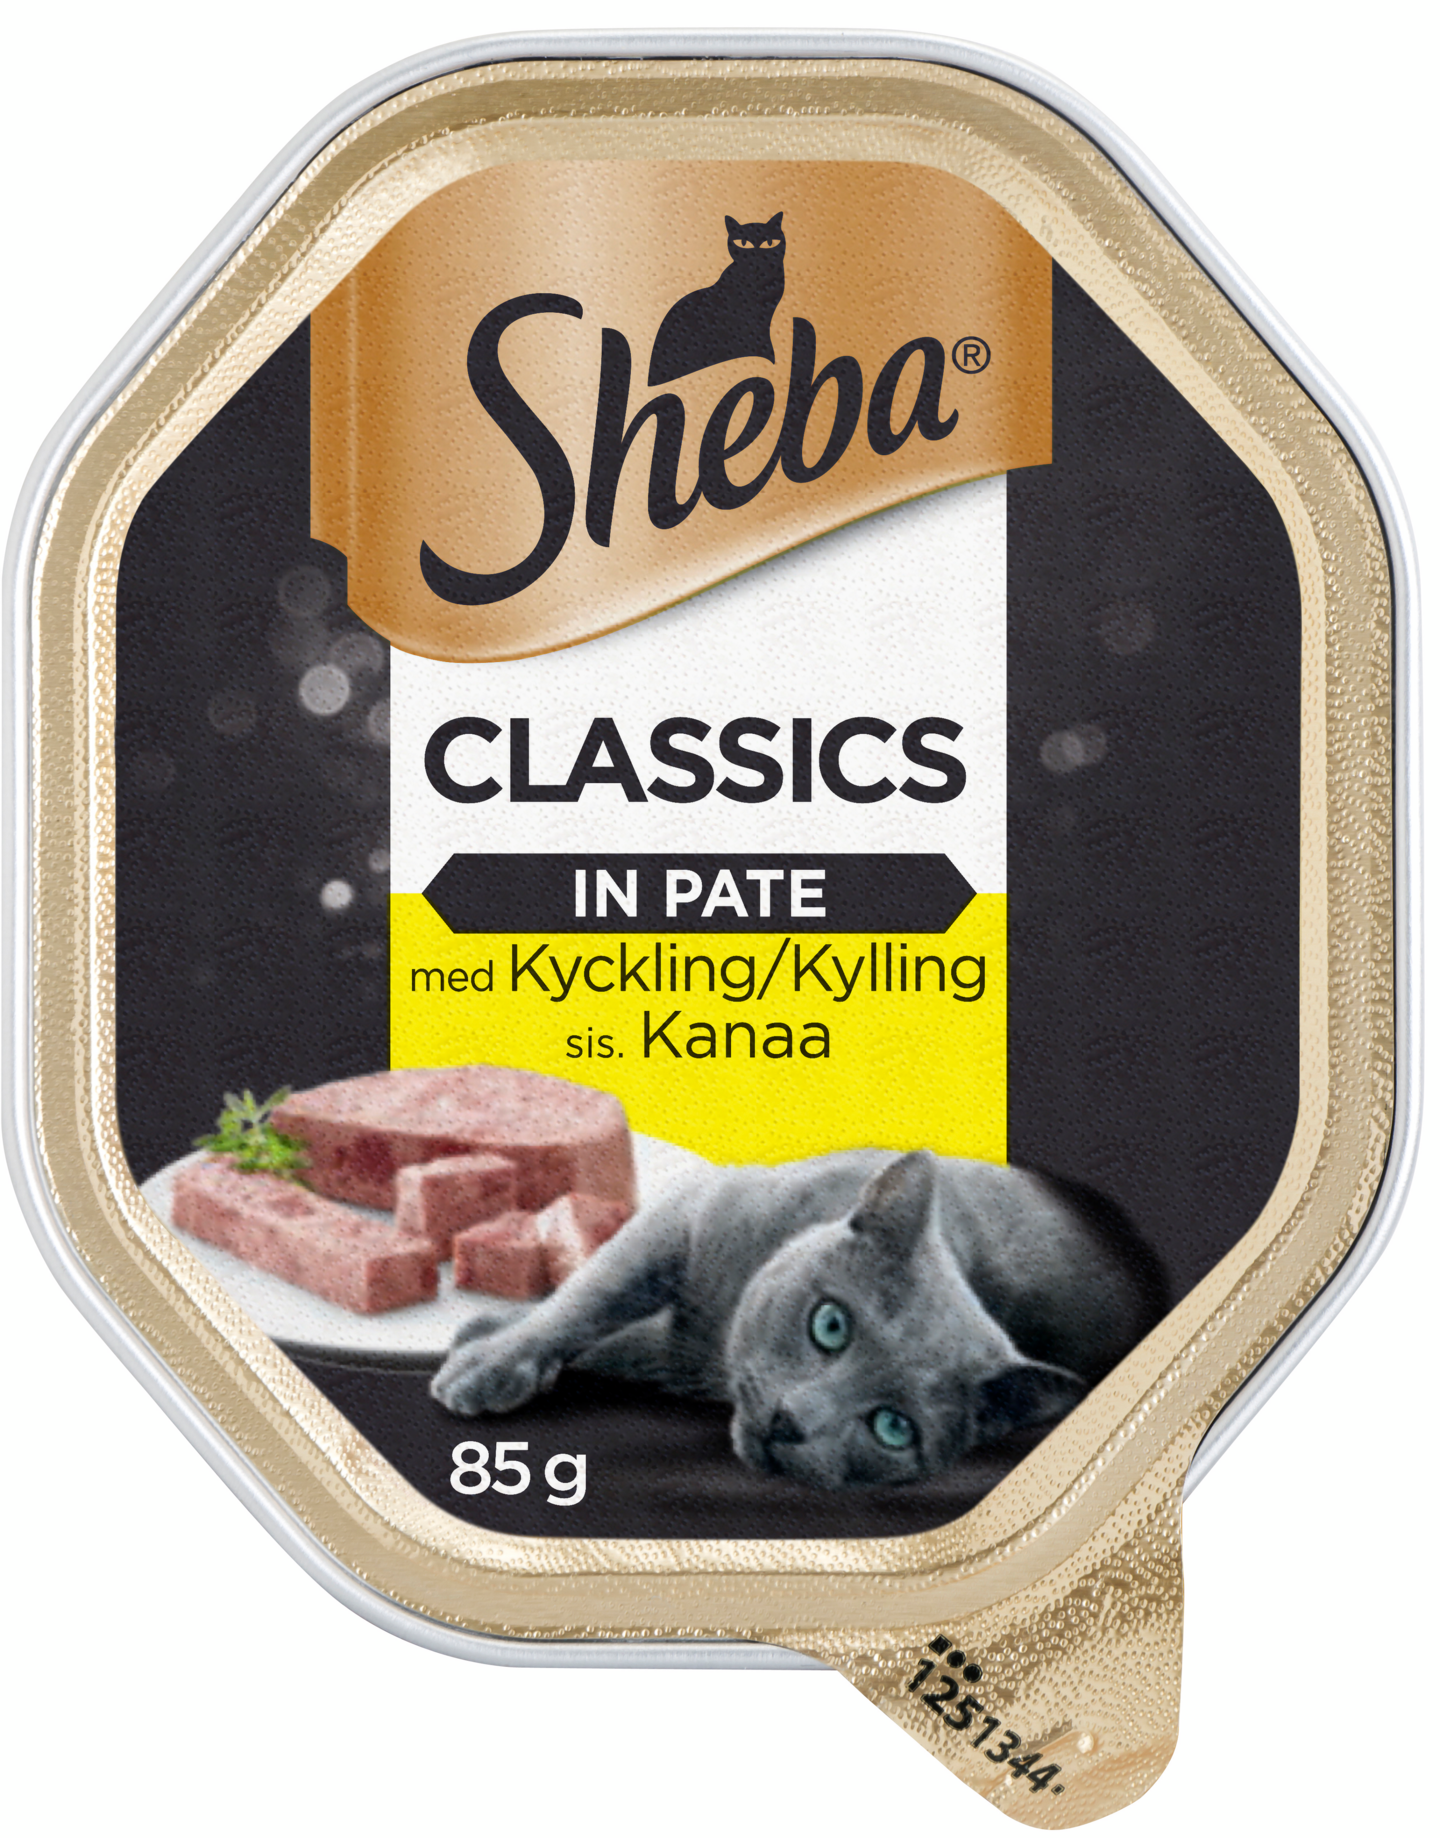 Sheba Classic kana patee 85g